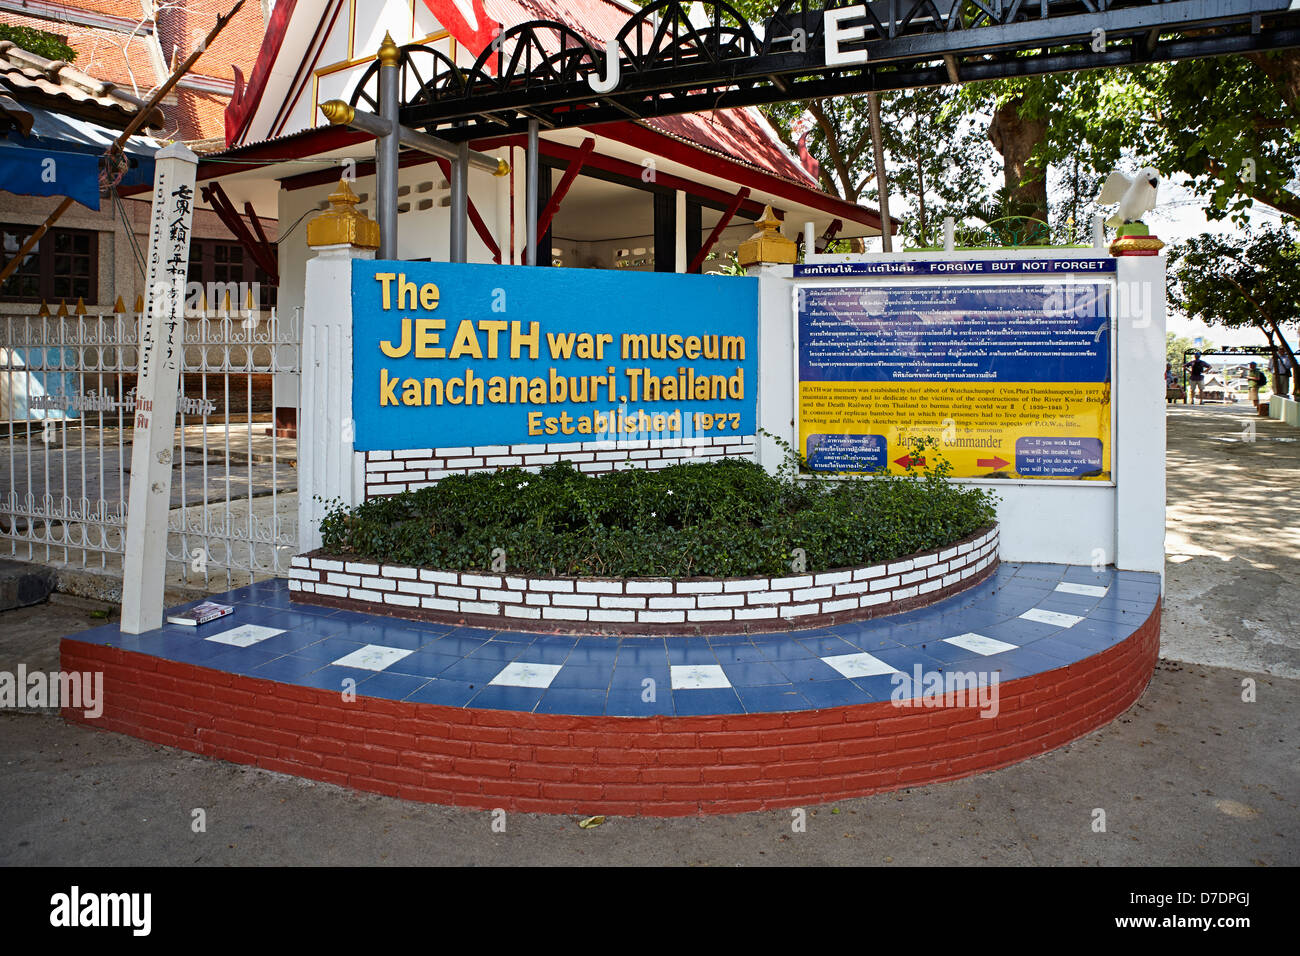 Jeath war museum Kanchanaburi. Entrance to the Jeath Allied Prisoner of War World War 2 museum in Thailand S. E. Asia. Stock Photo